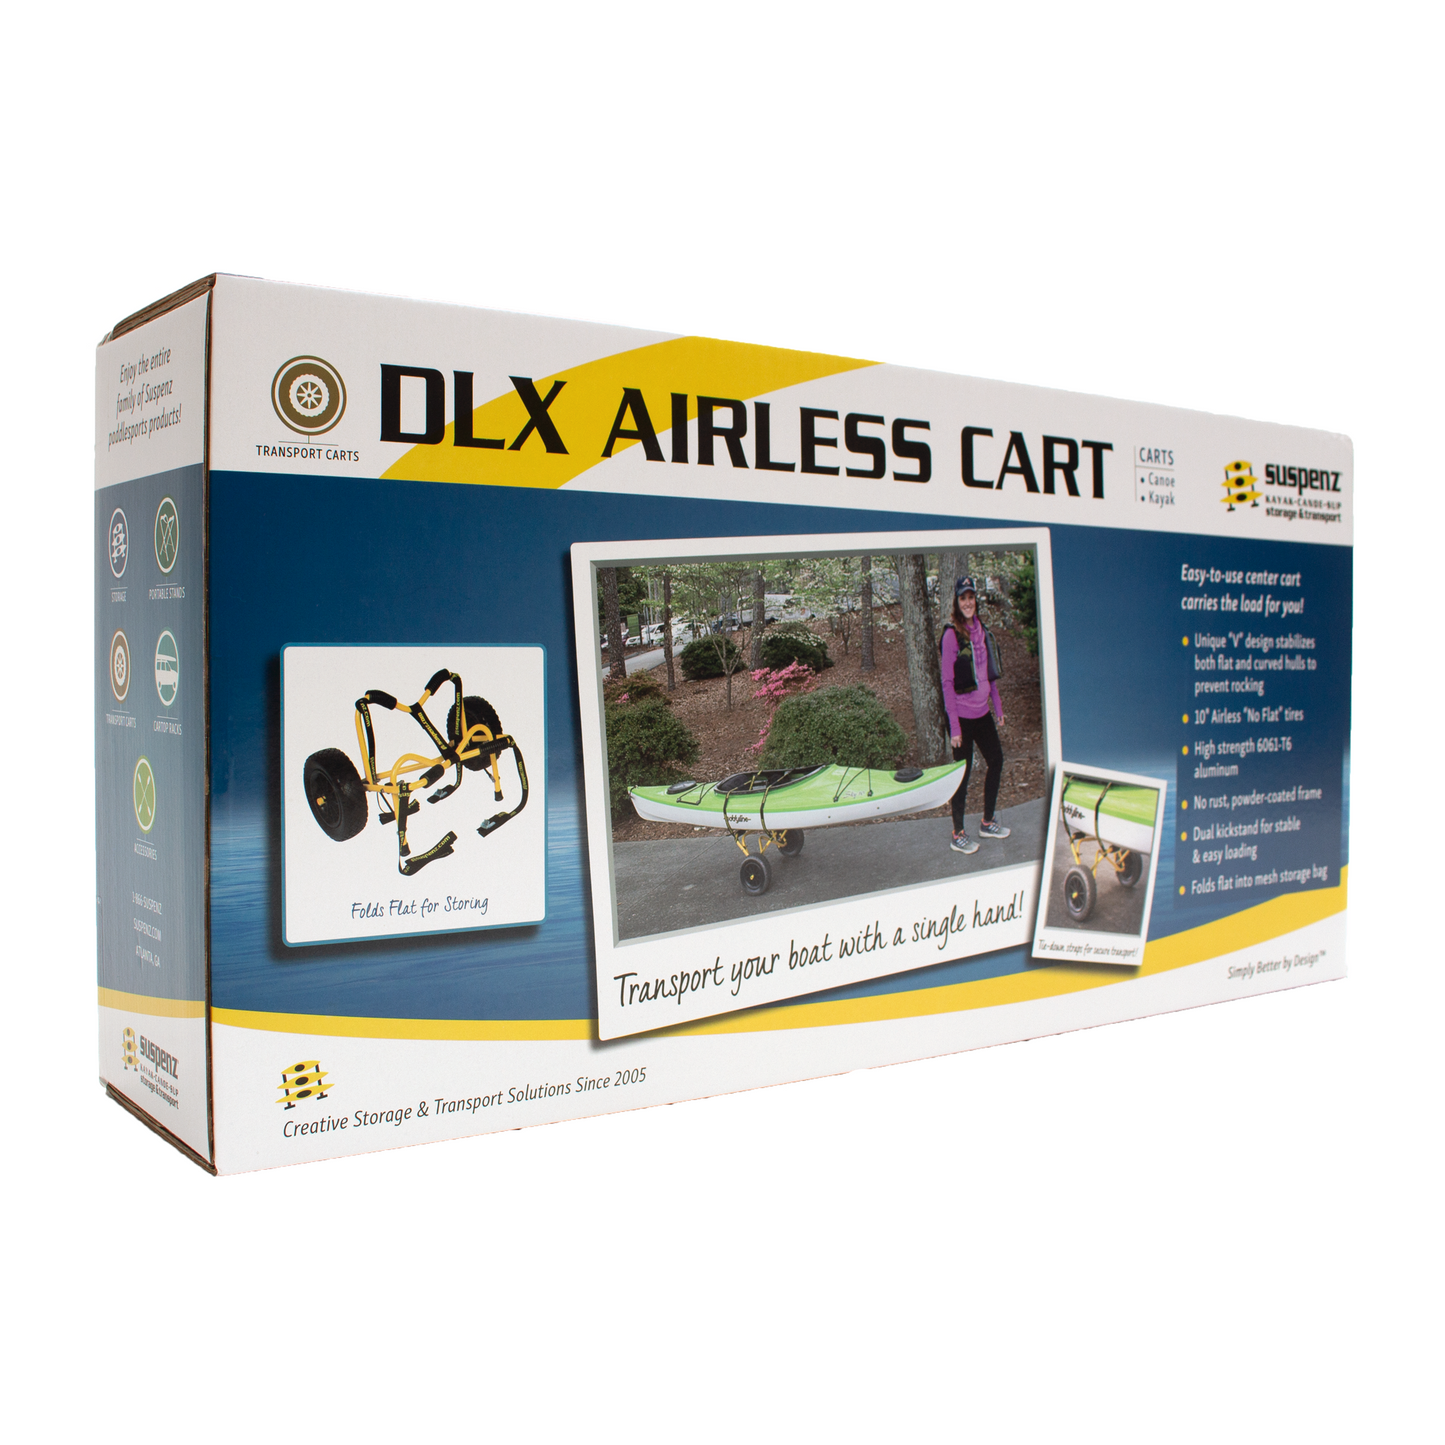 DLX Airless Cart